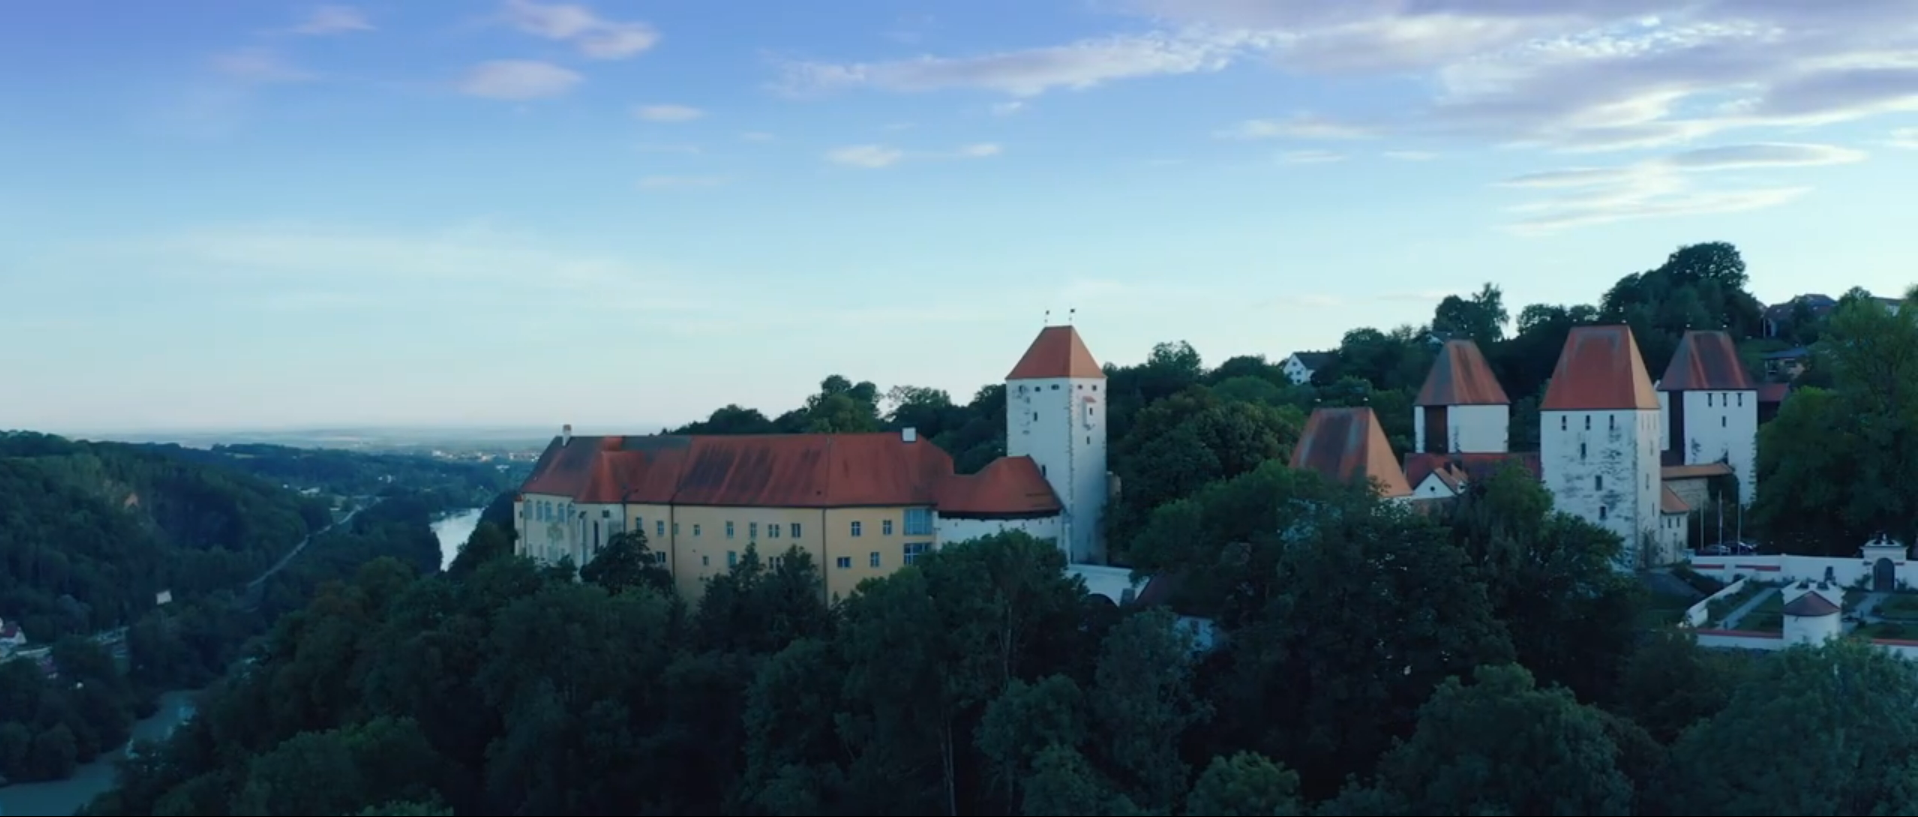 Imagevideo - Passauer Land